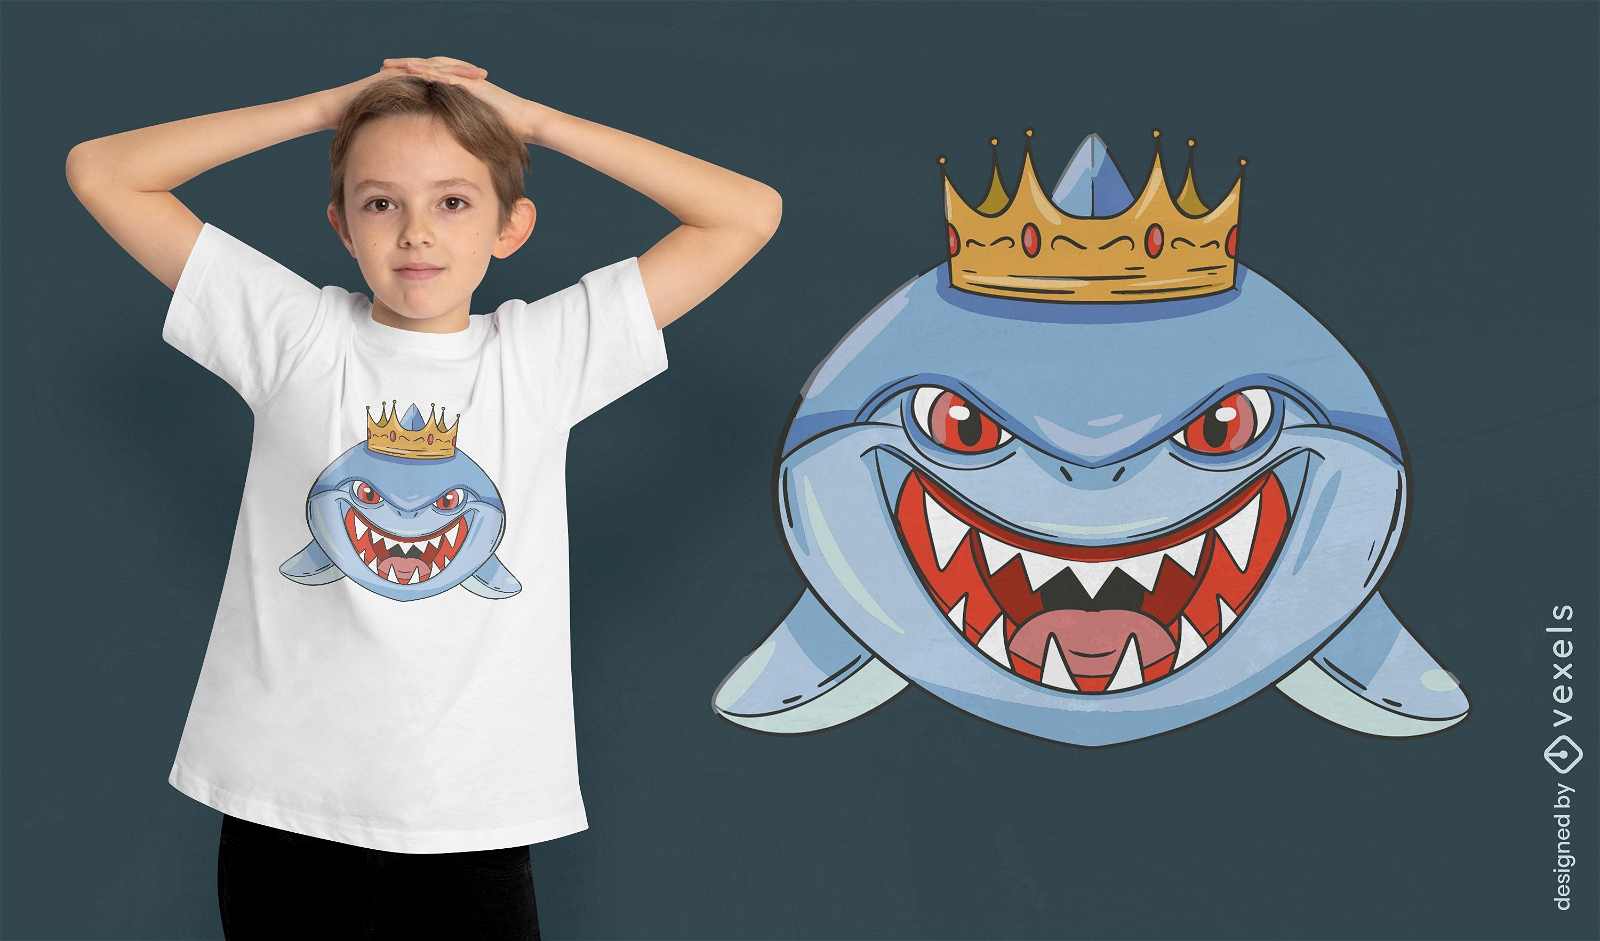 Cartoon shark with crown t-shirt design